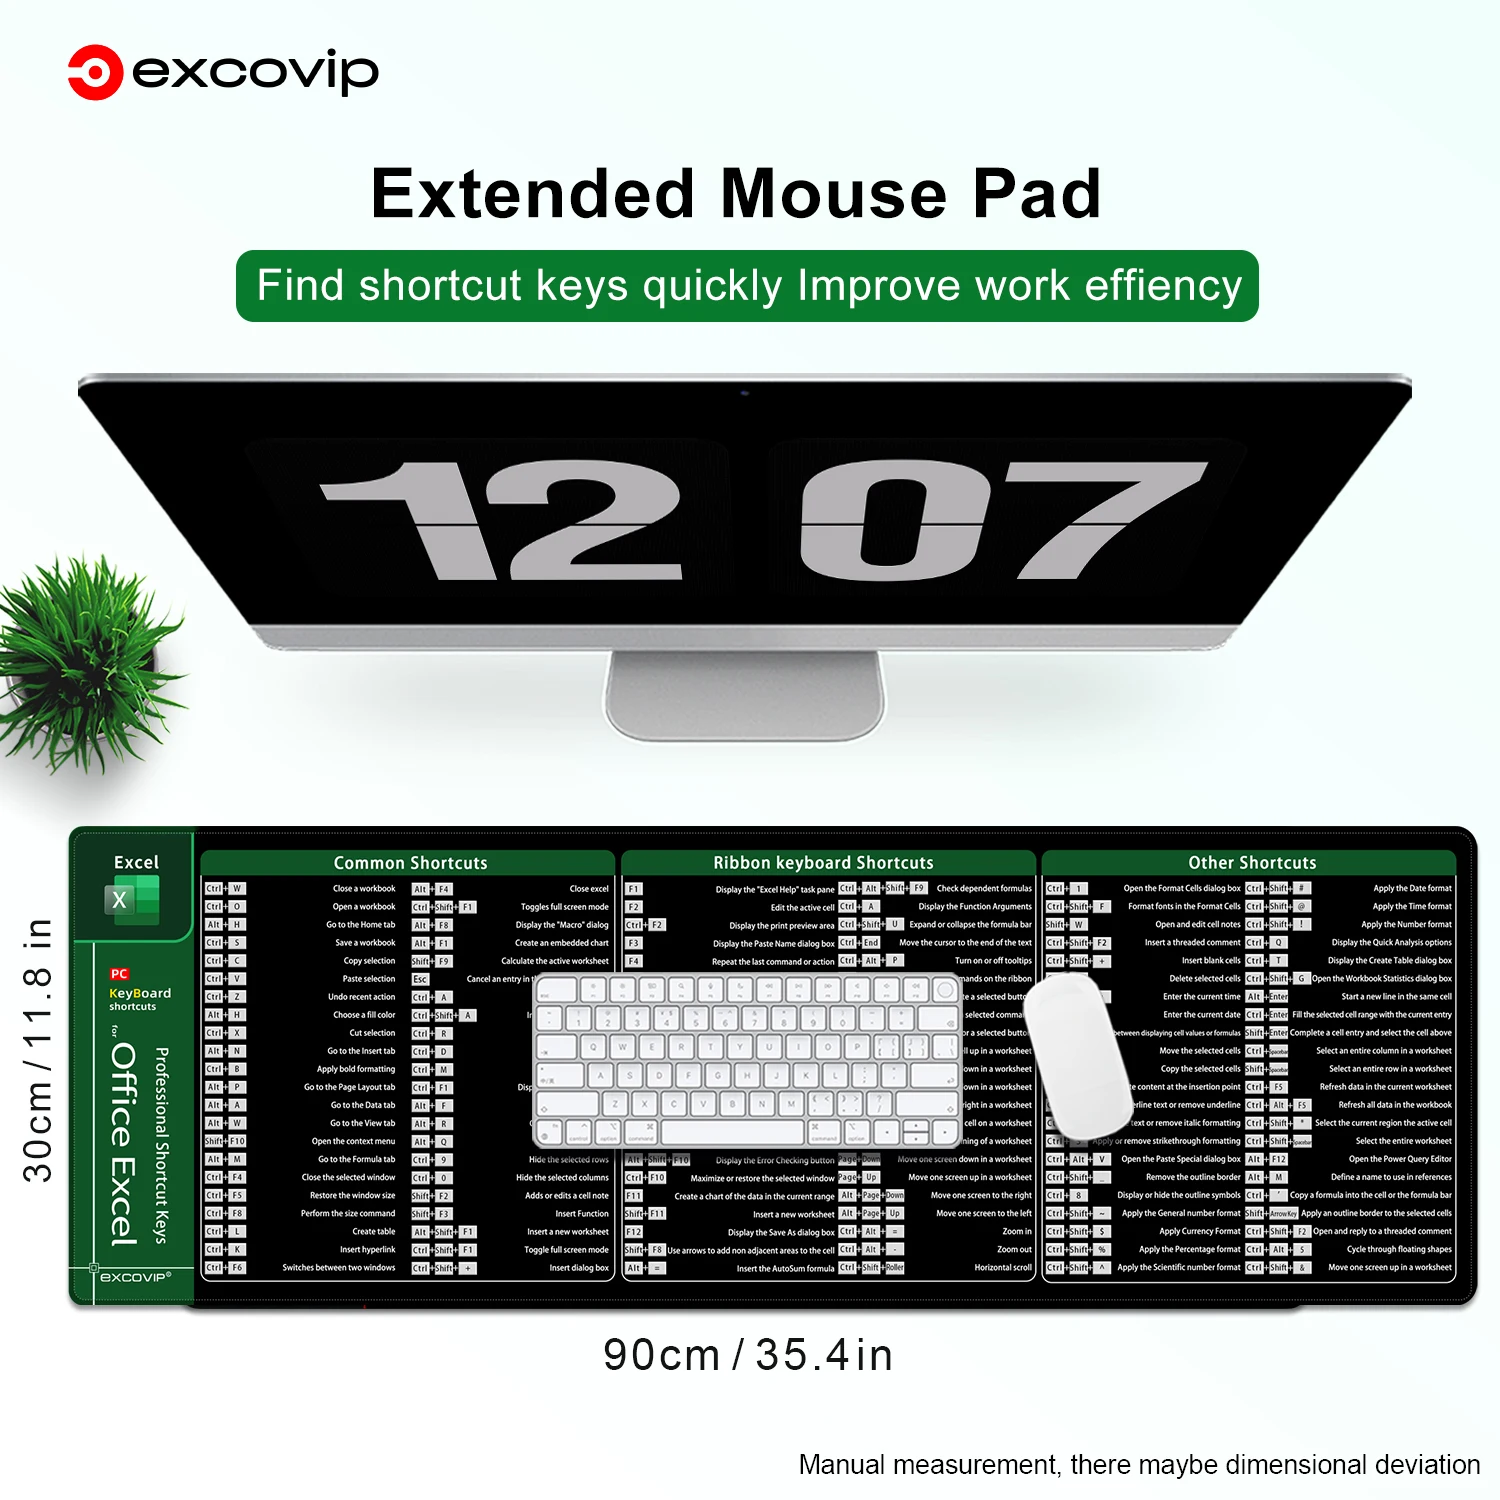 EXCO-Excel Grande Mouse Pad Estendido, Esteira de Mesa do Computador do Escritório, Teclado Grande Mousepad com Borda Costurada, Base Antiderrapante